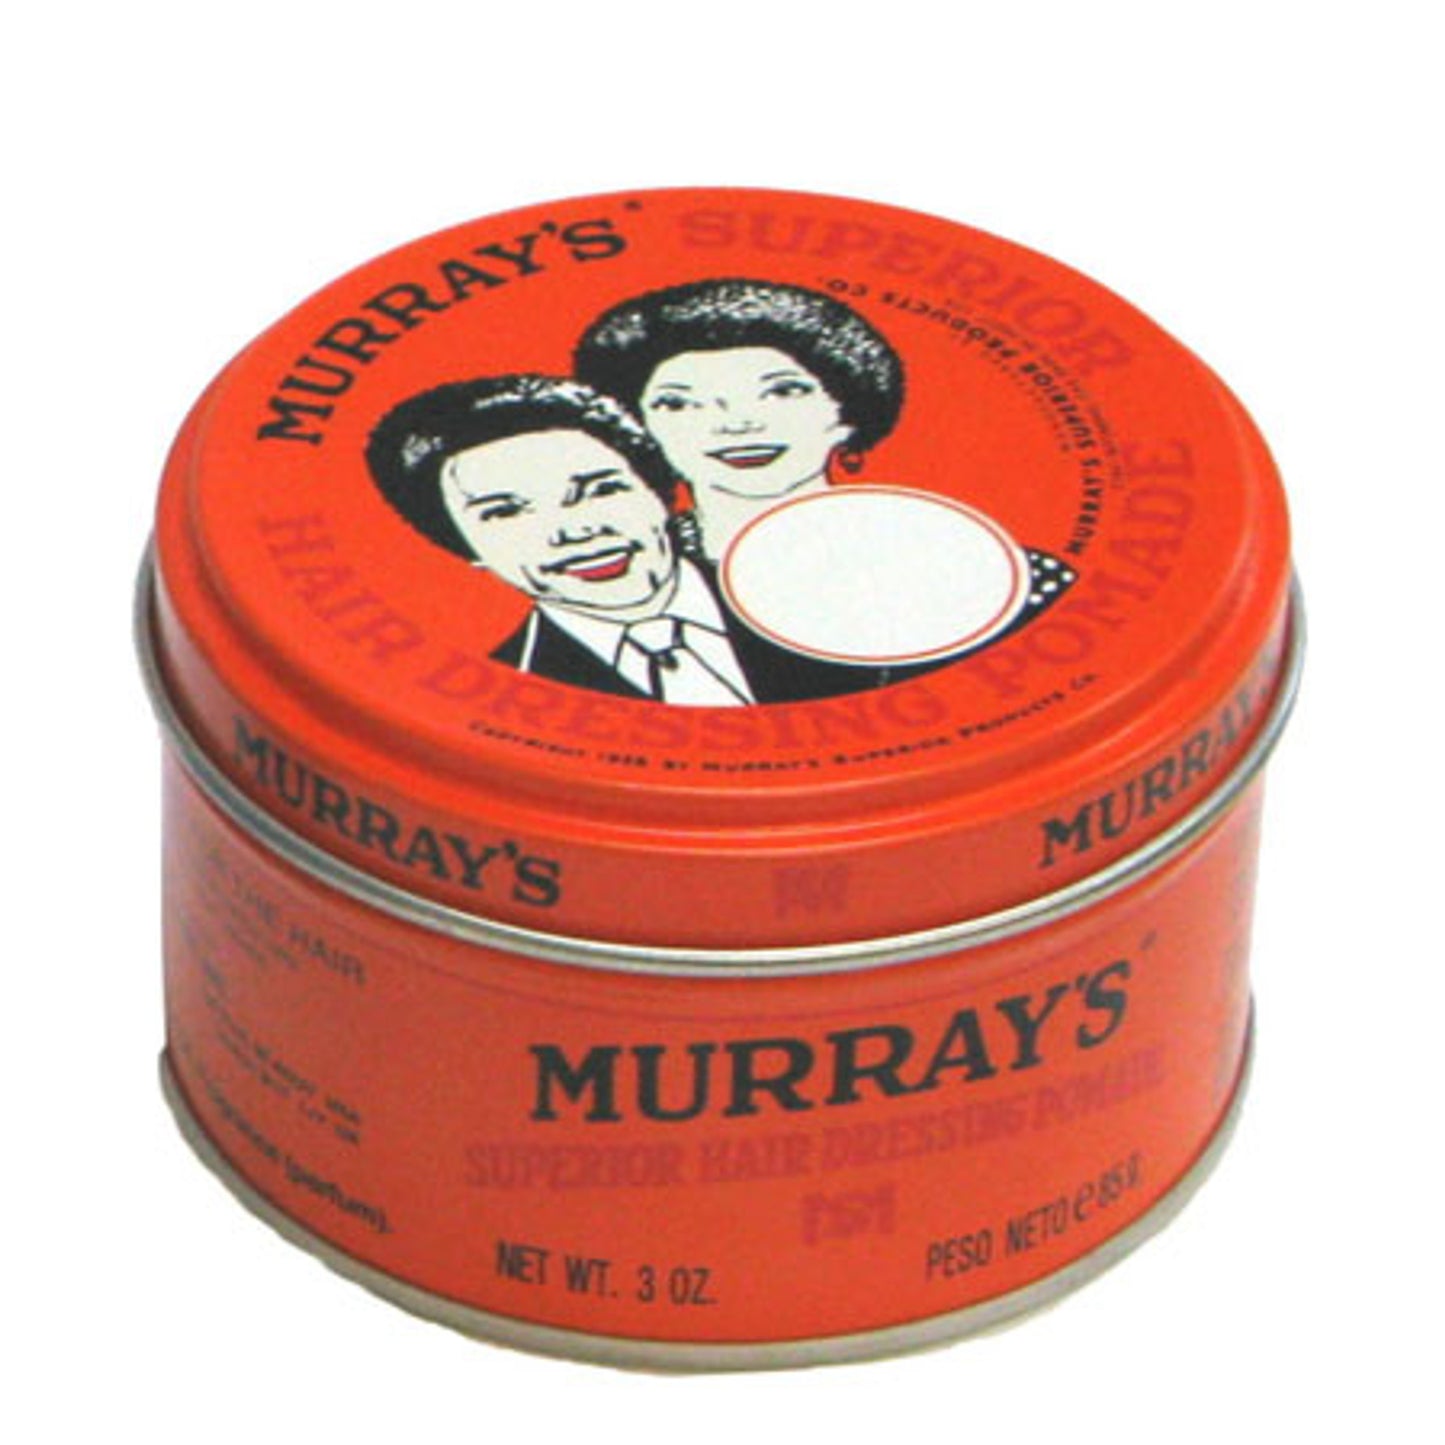 Murray's Superior Hair Dressing Pomade - 3oz